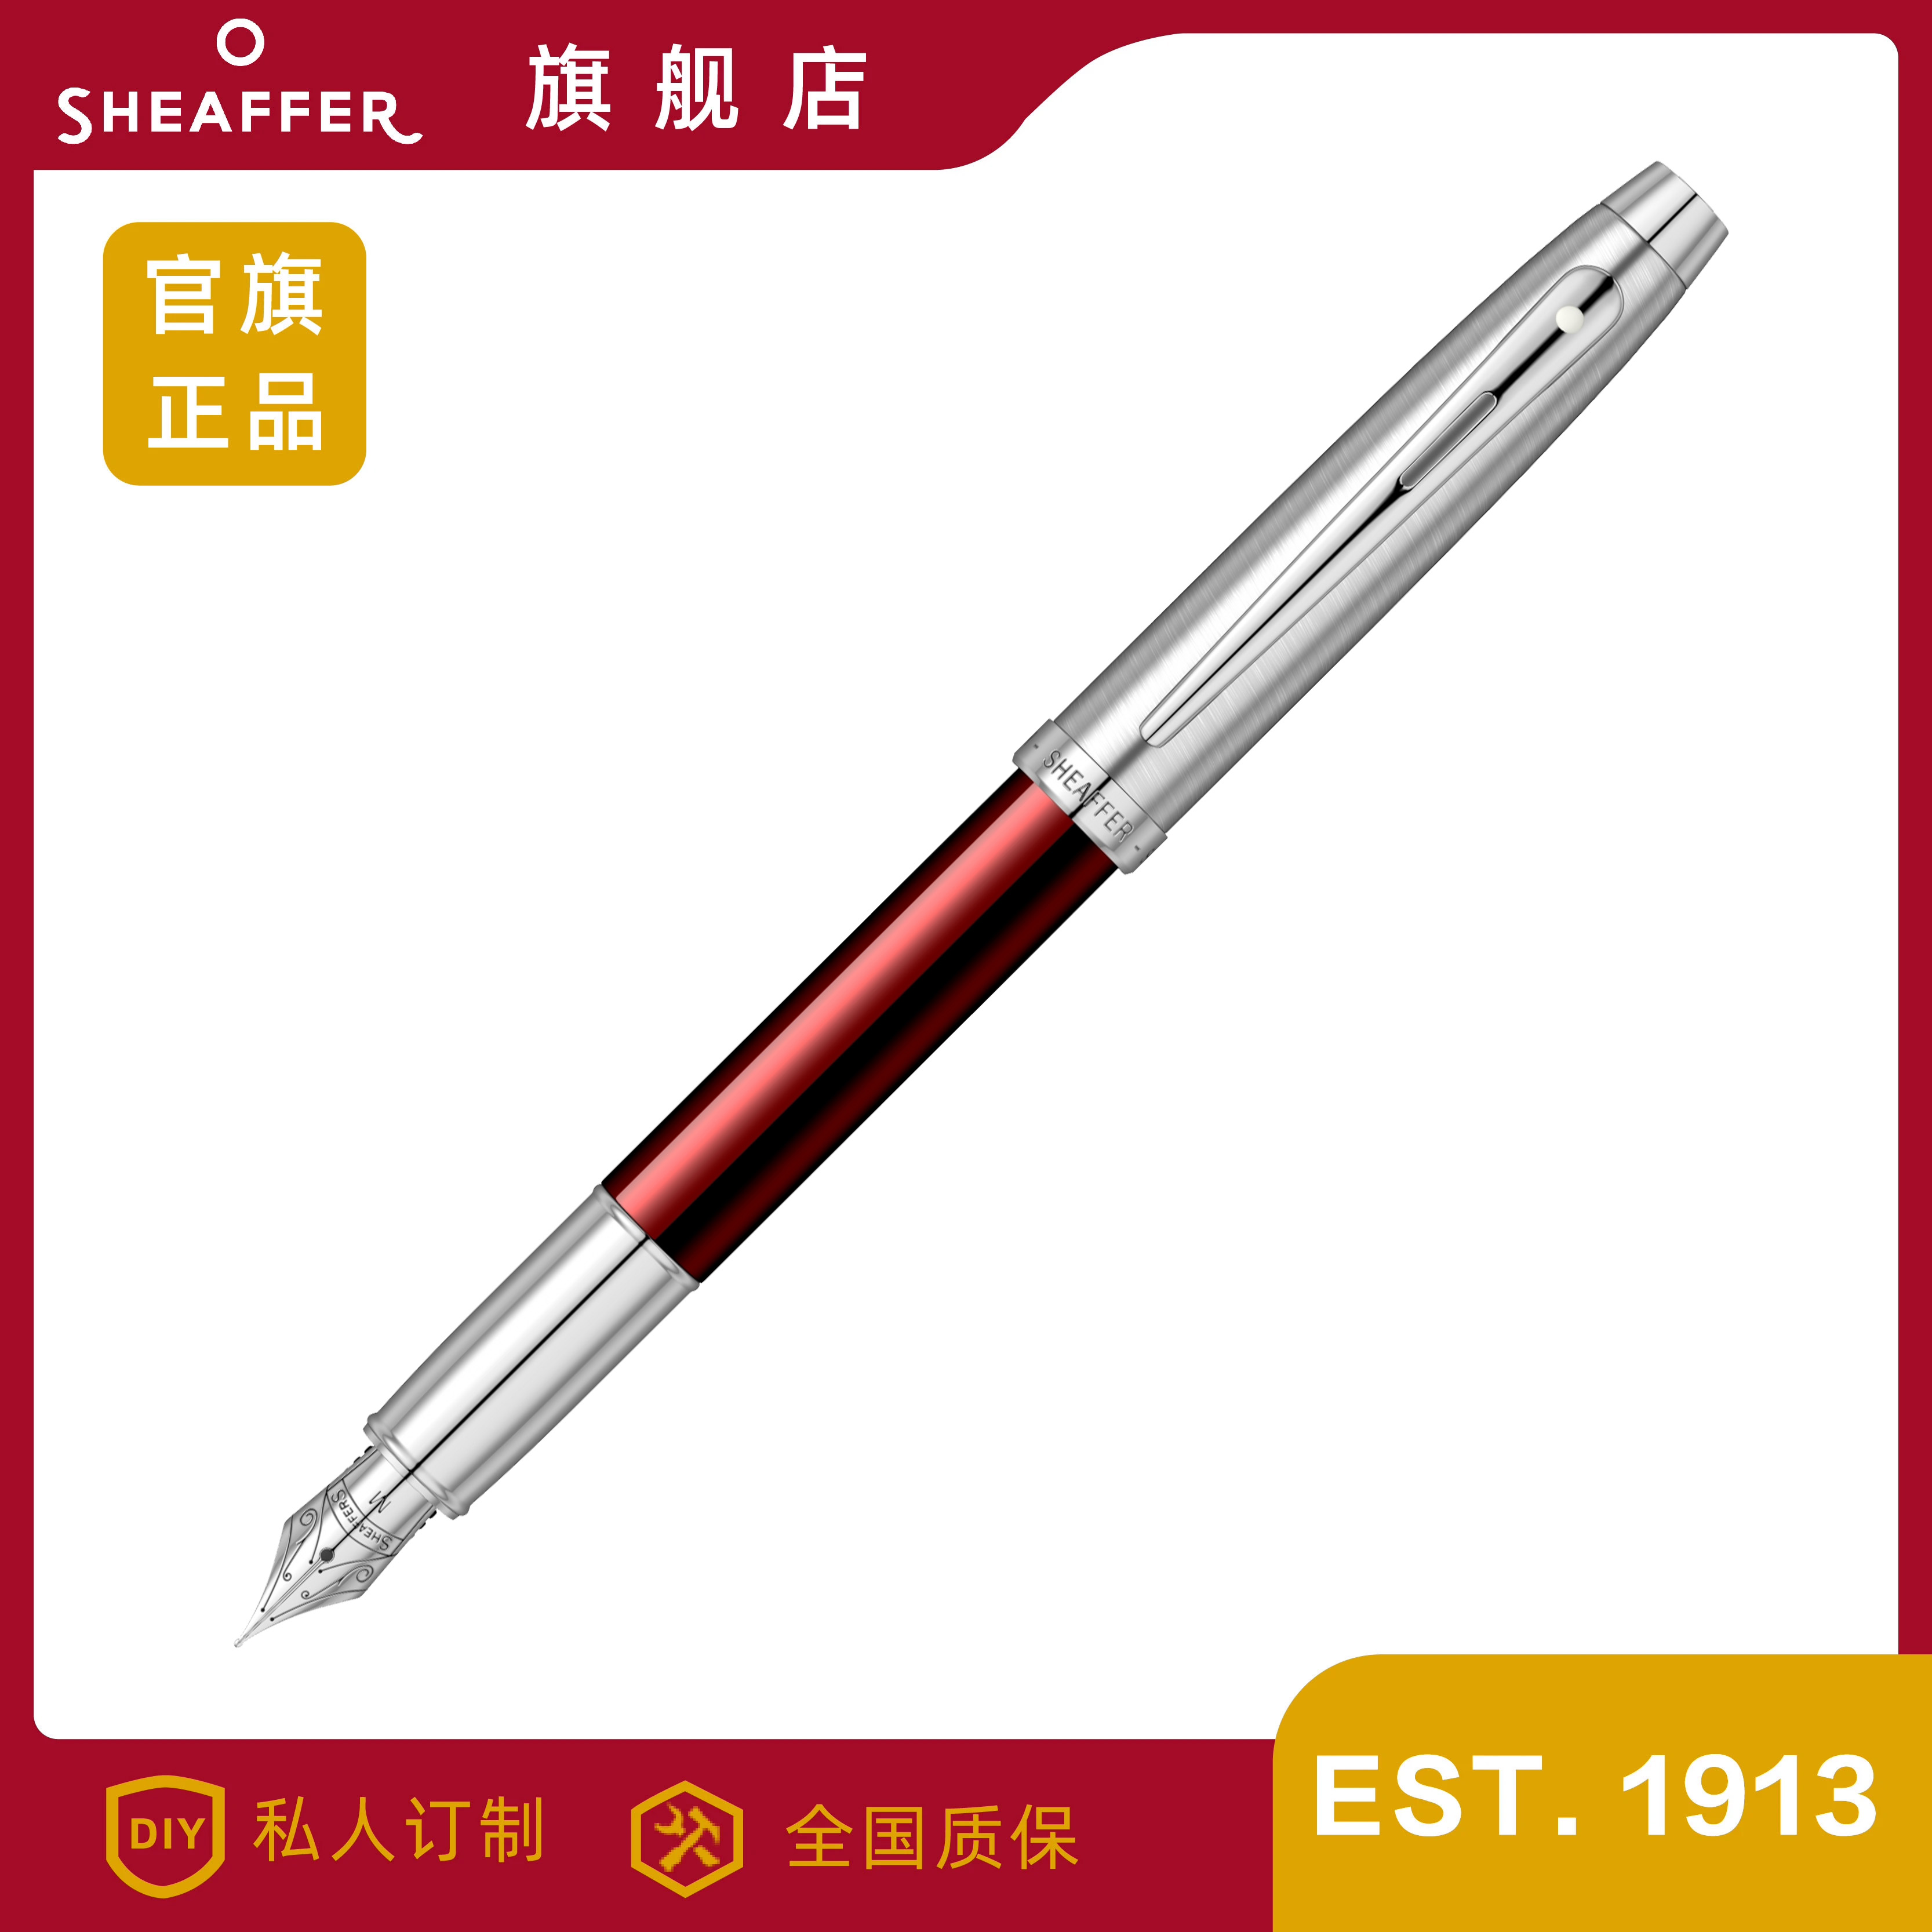 SHEAFFER 犀飞利 钢笔 100系列 E0931343-30